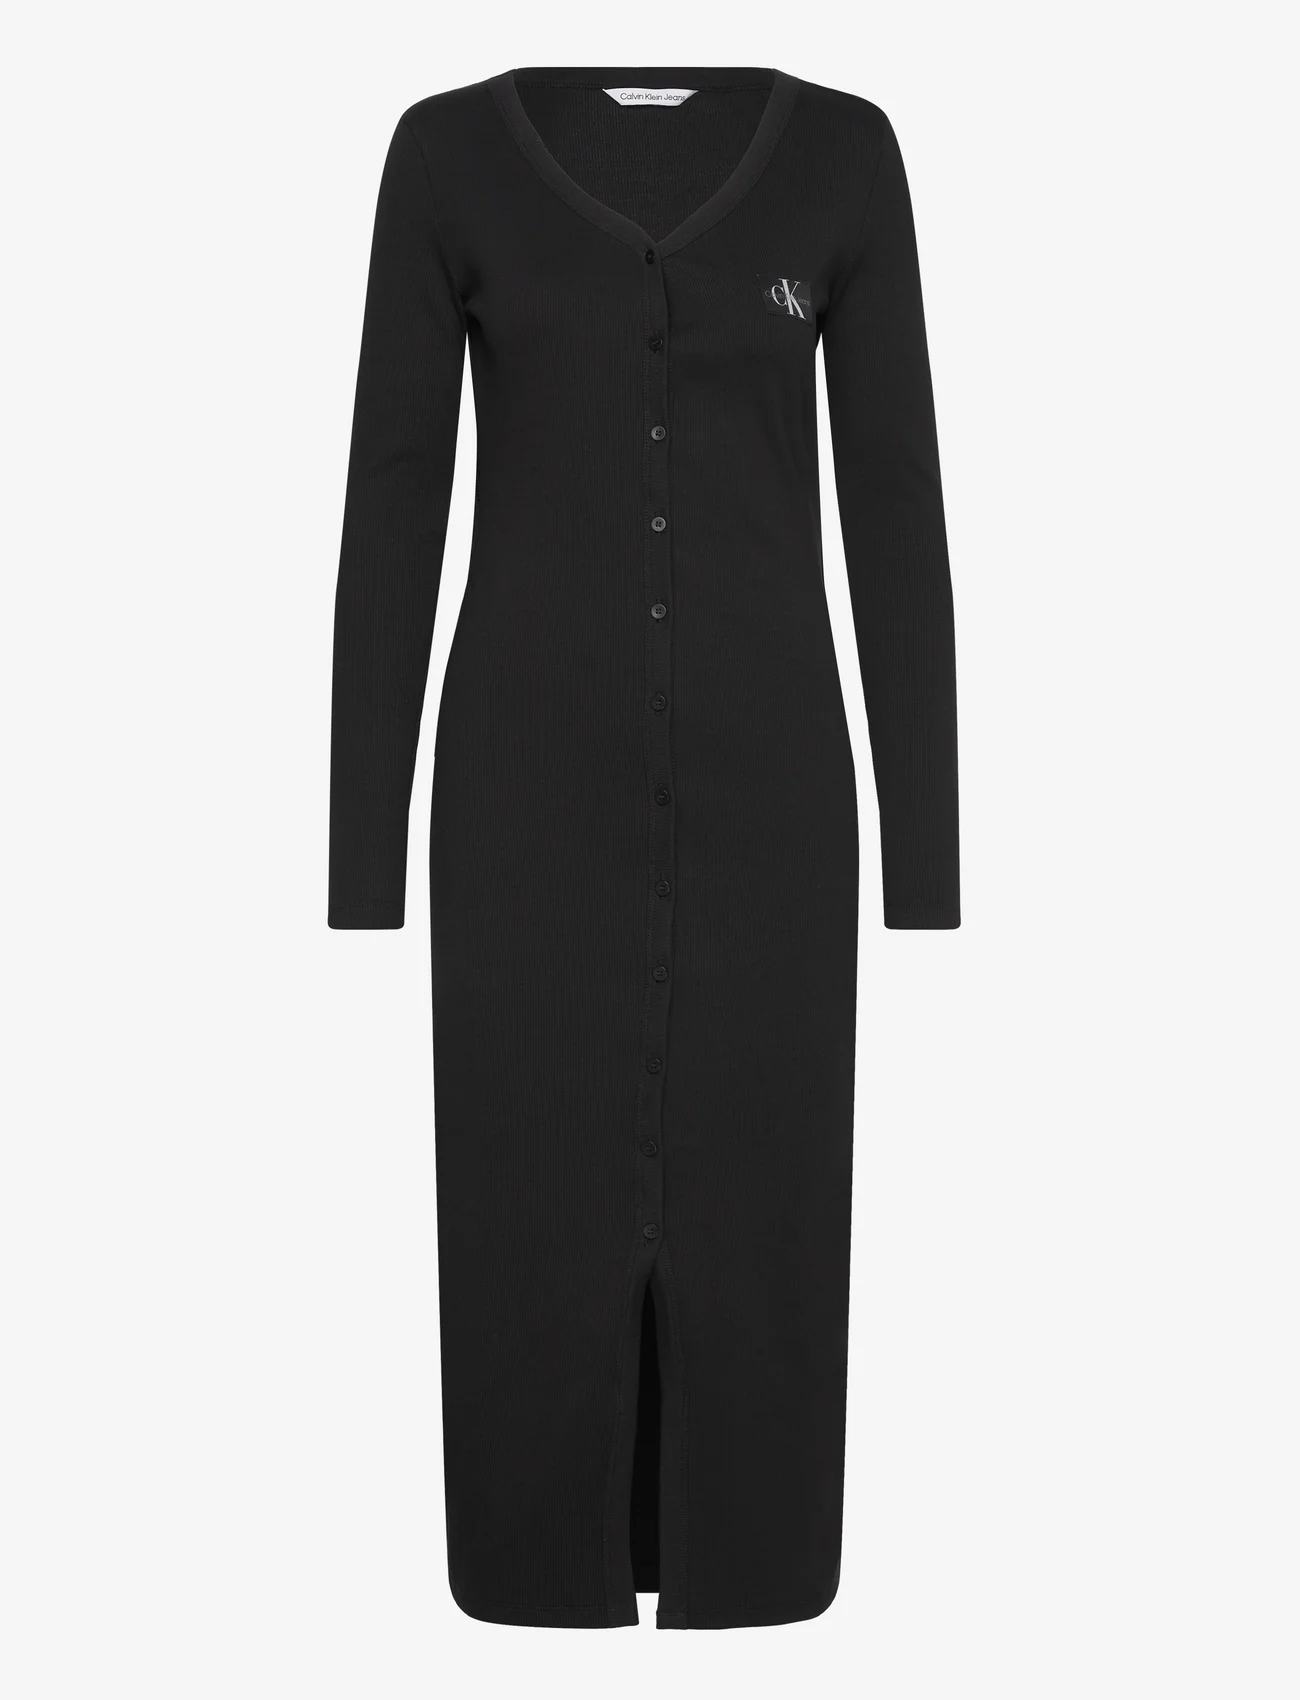 Calvin Klein Jeans - LABEL LONG SLEEVE RIB DRESS - aptemtos suknelės - ck black - 0